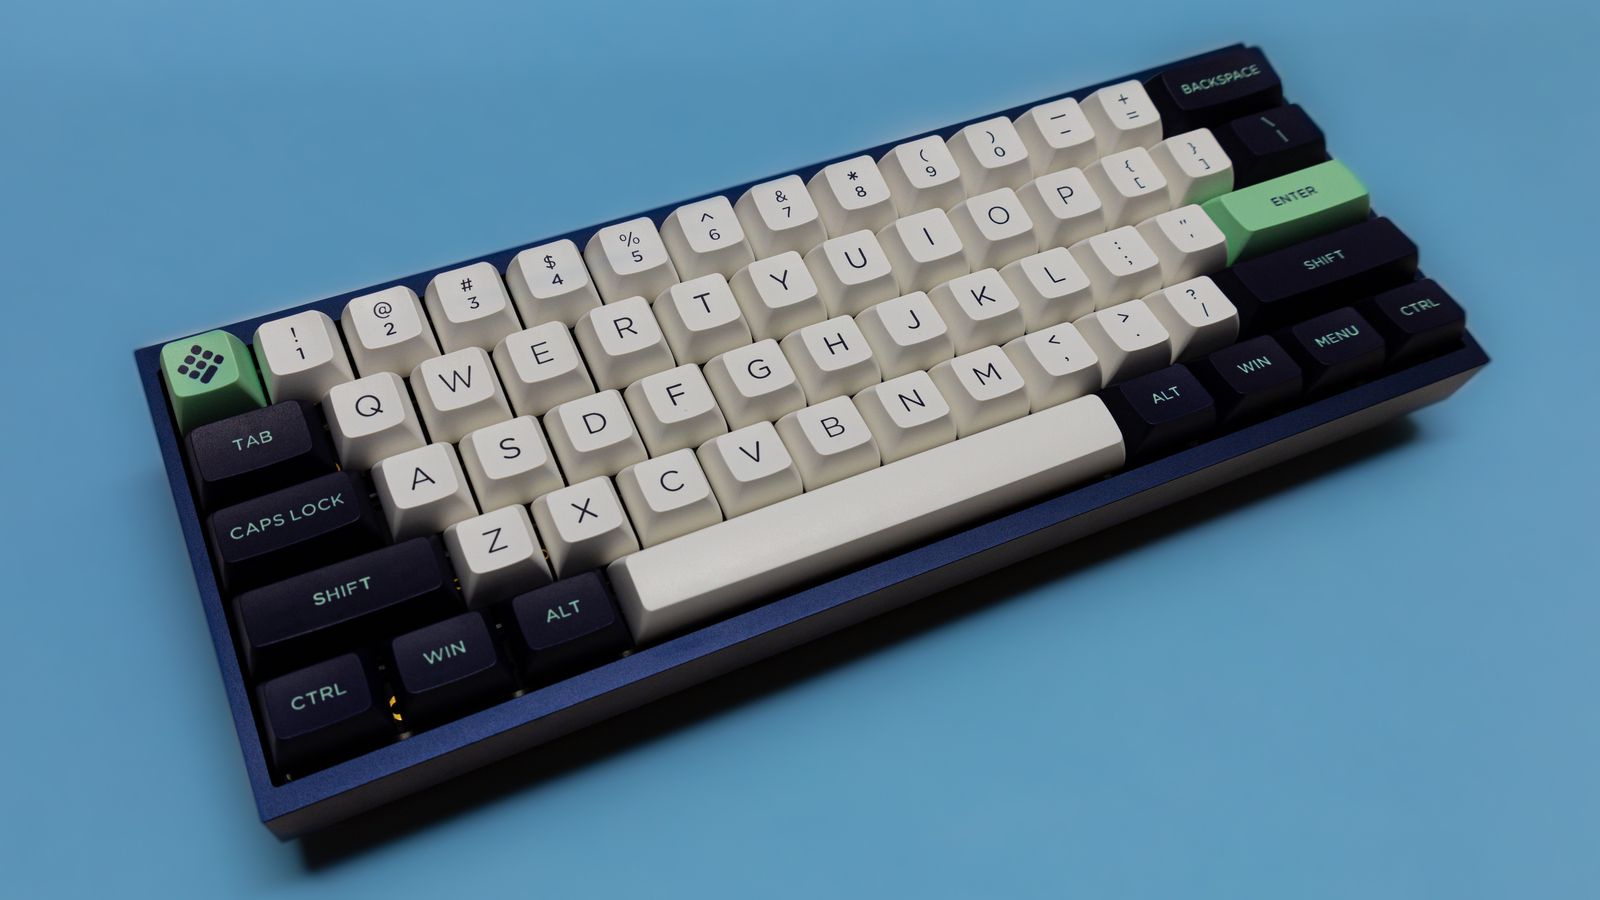 60% mechanical keyboard against blue background